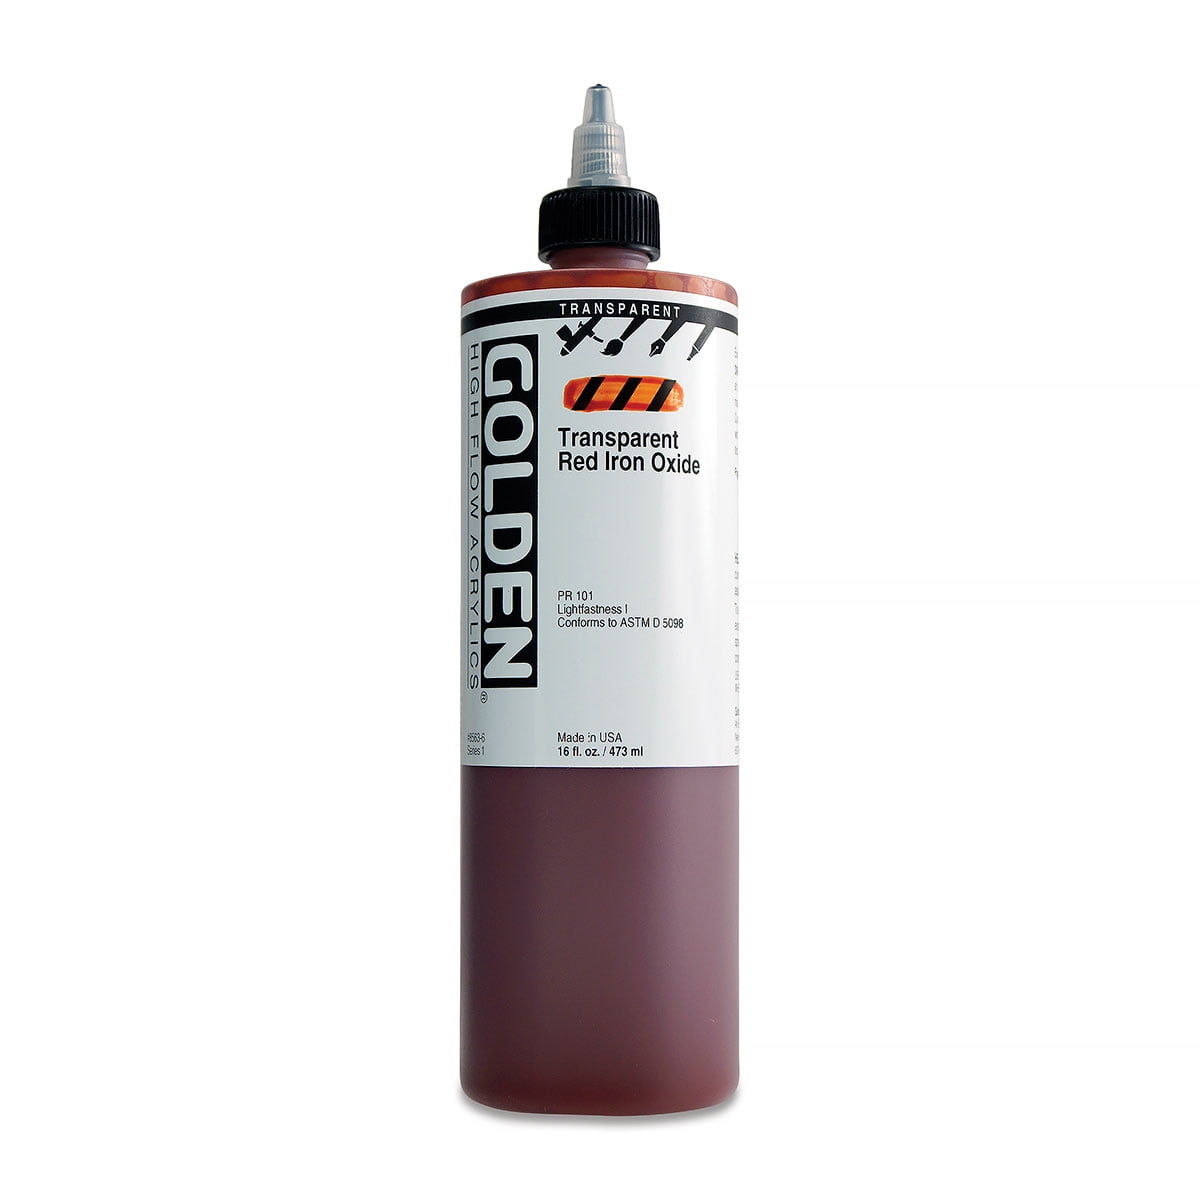 Black iron oxide powder pigment usp pharmaceutical grade for diy 2